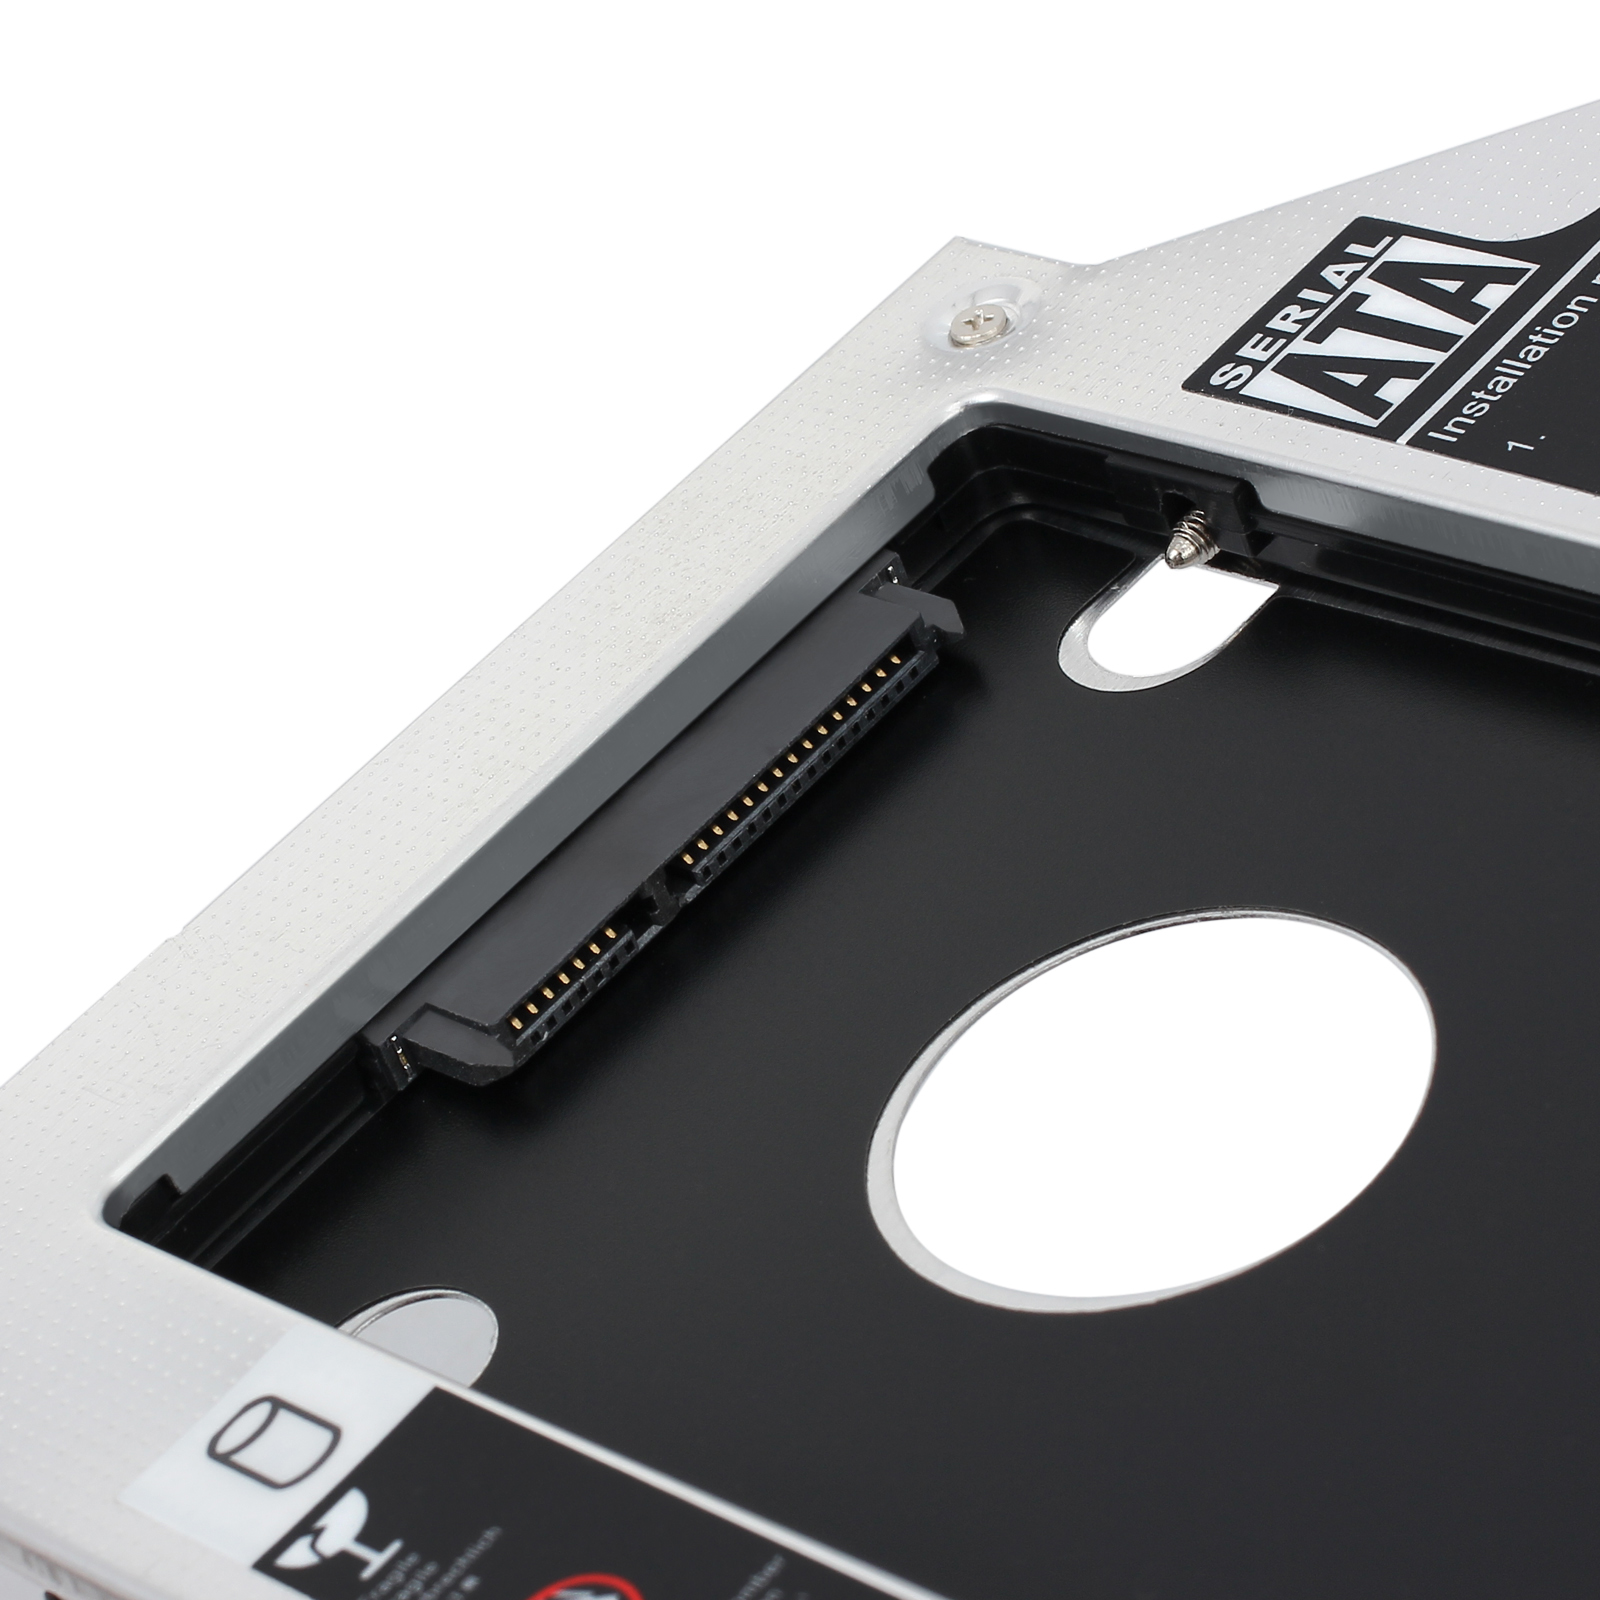 macbook pro 2tb internal hard drive